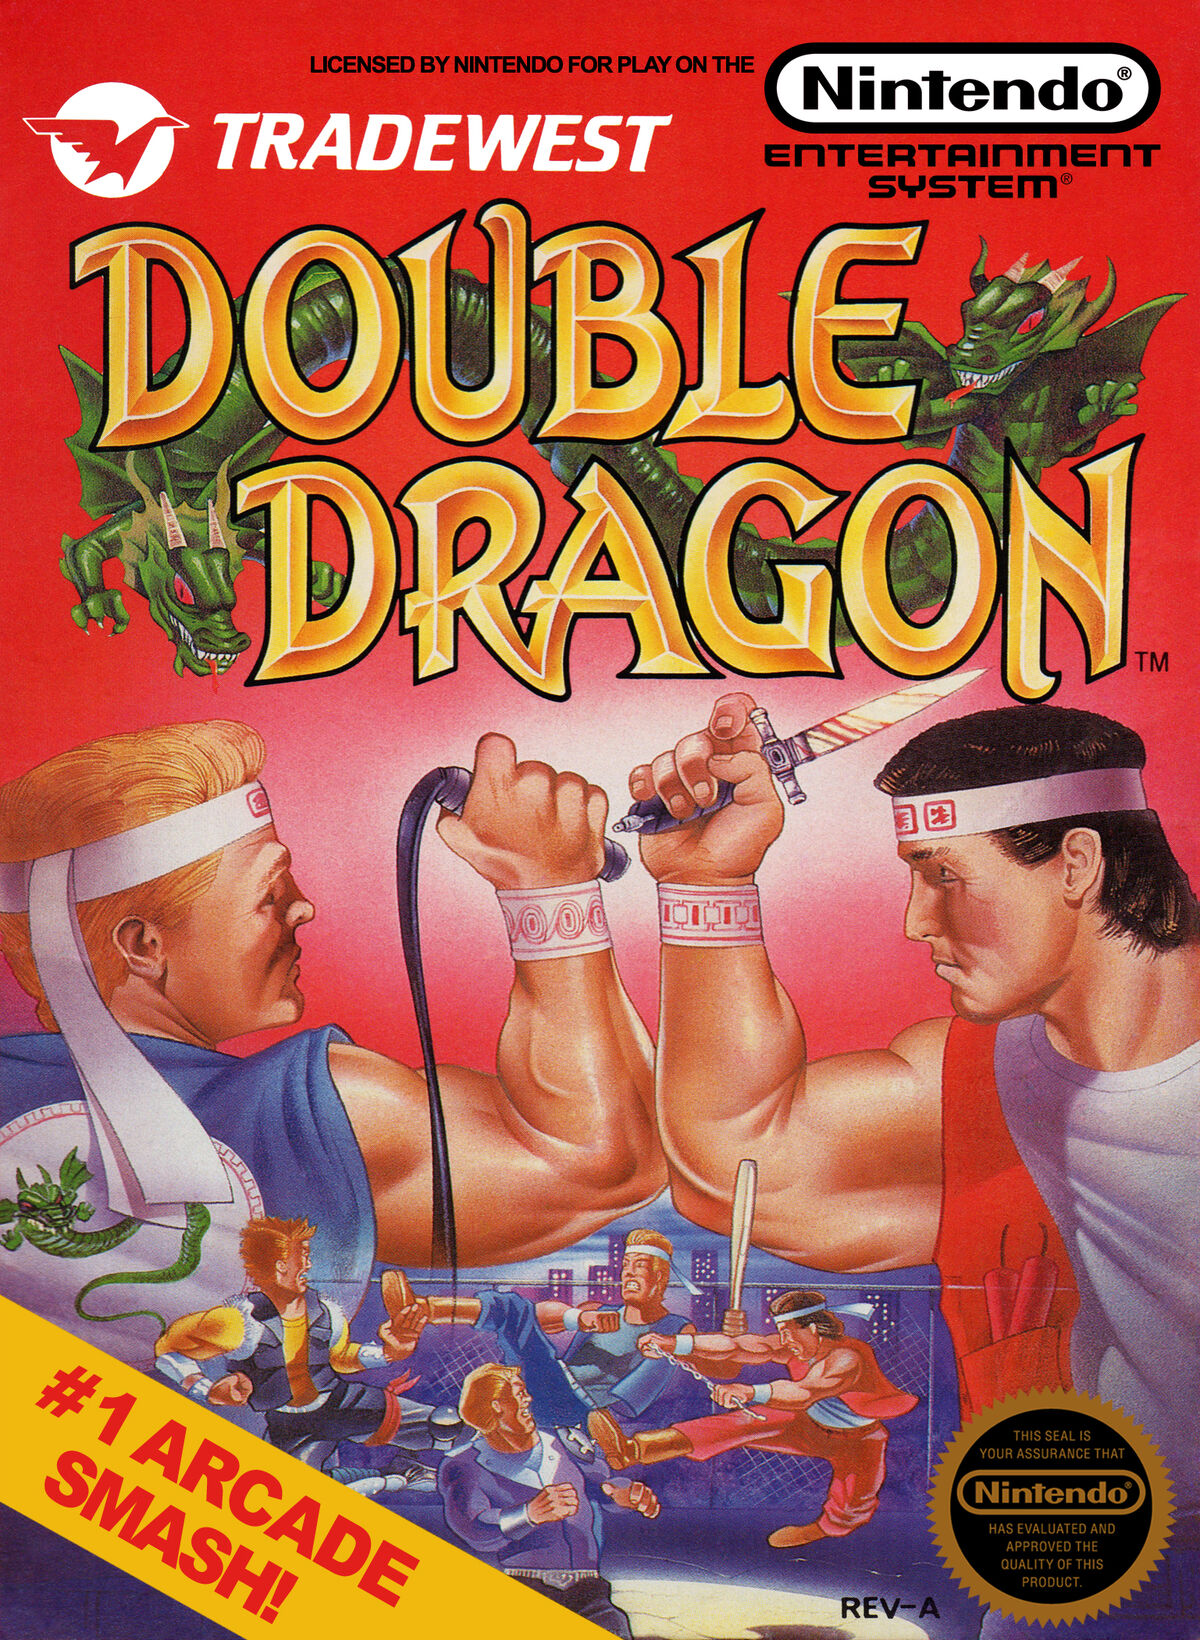 Double Dragon Dojo: Double Dragon II NES version review